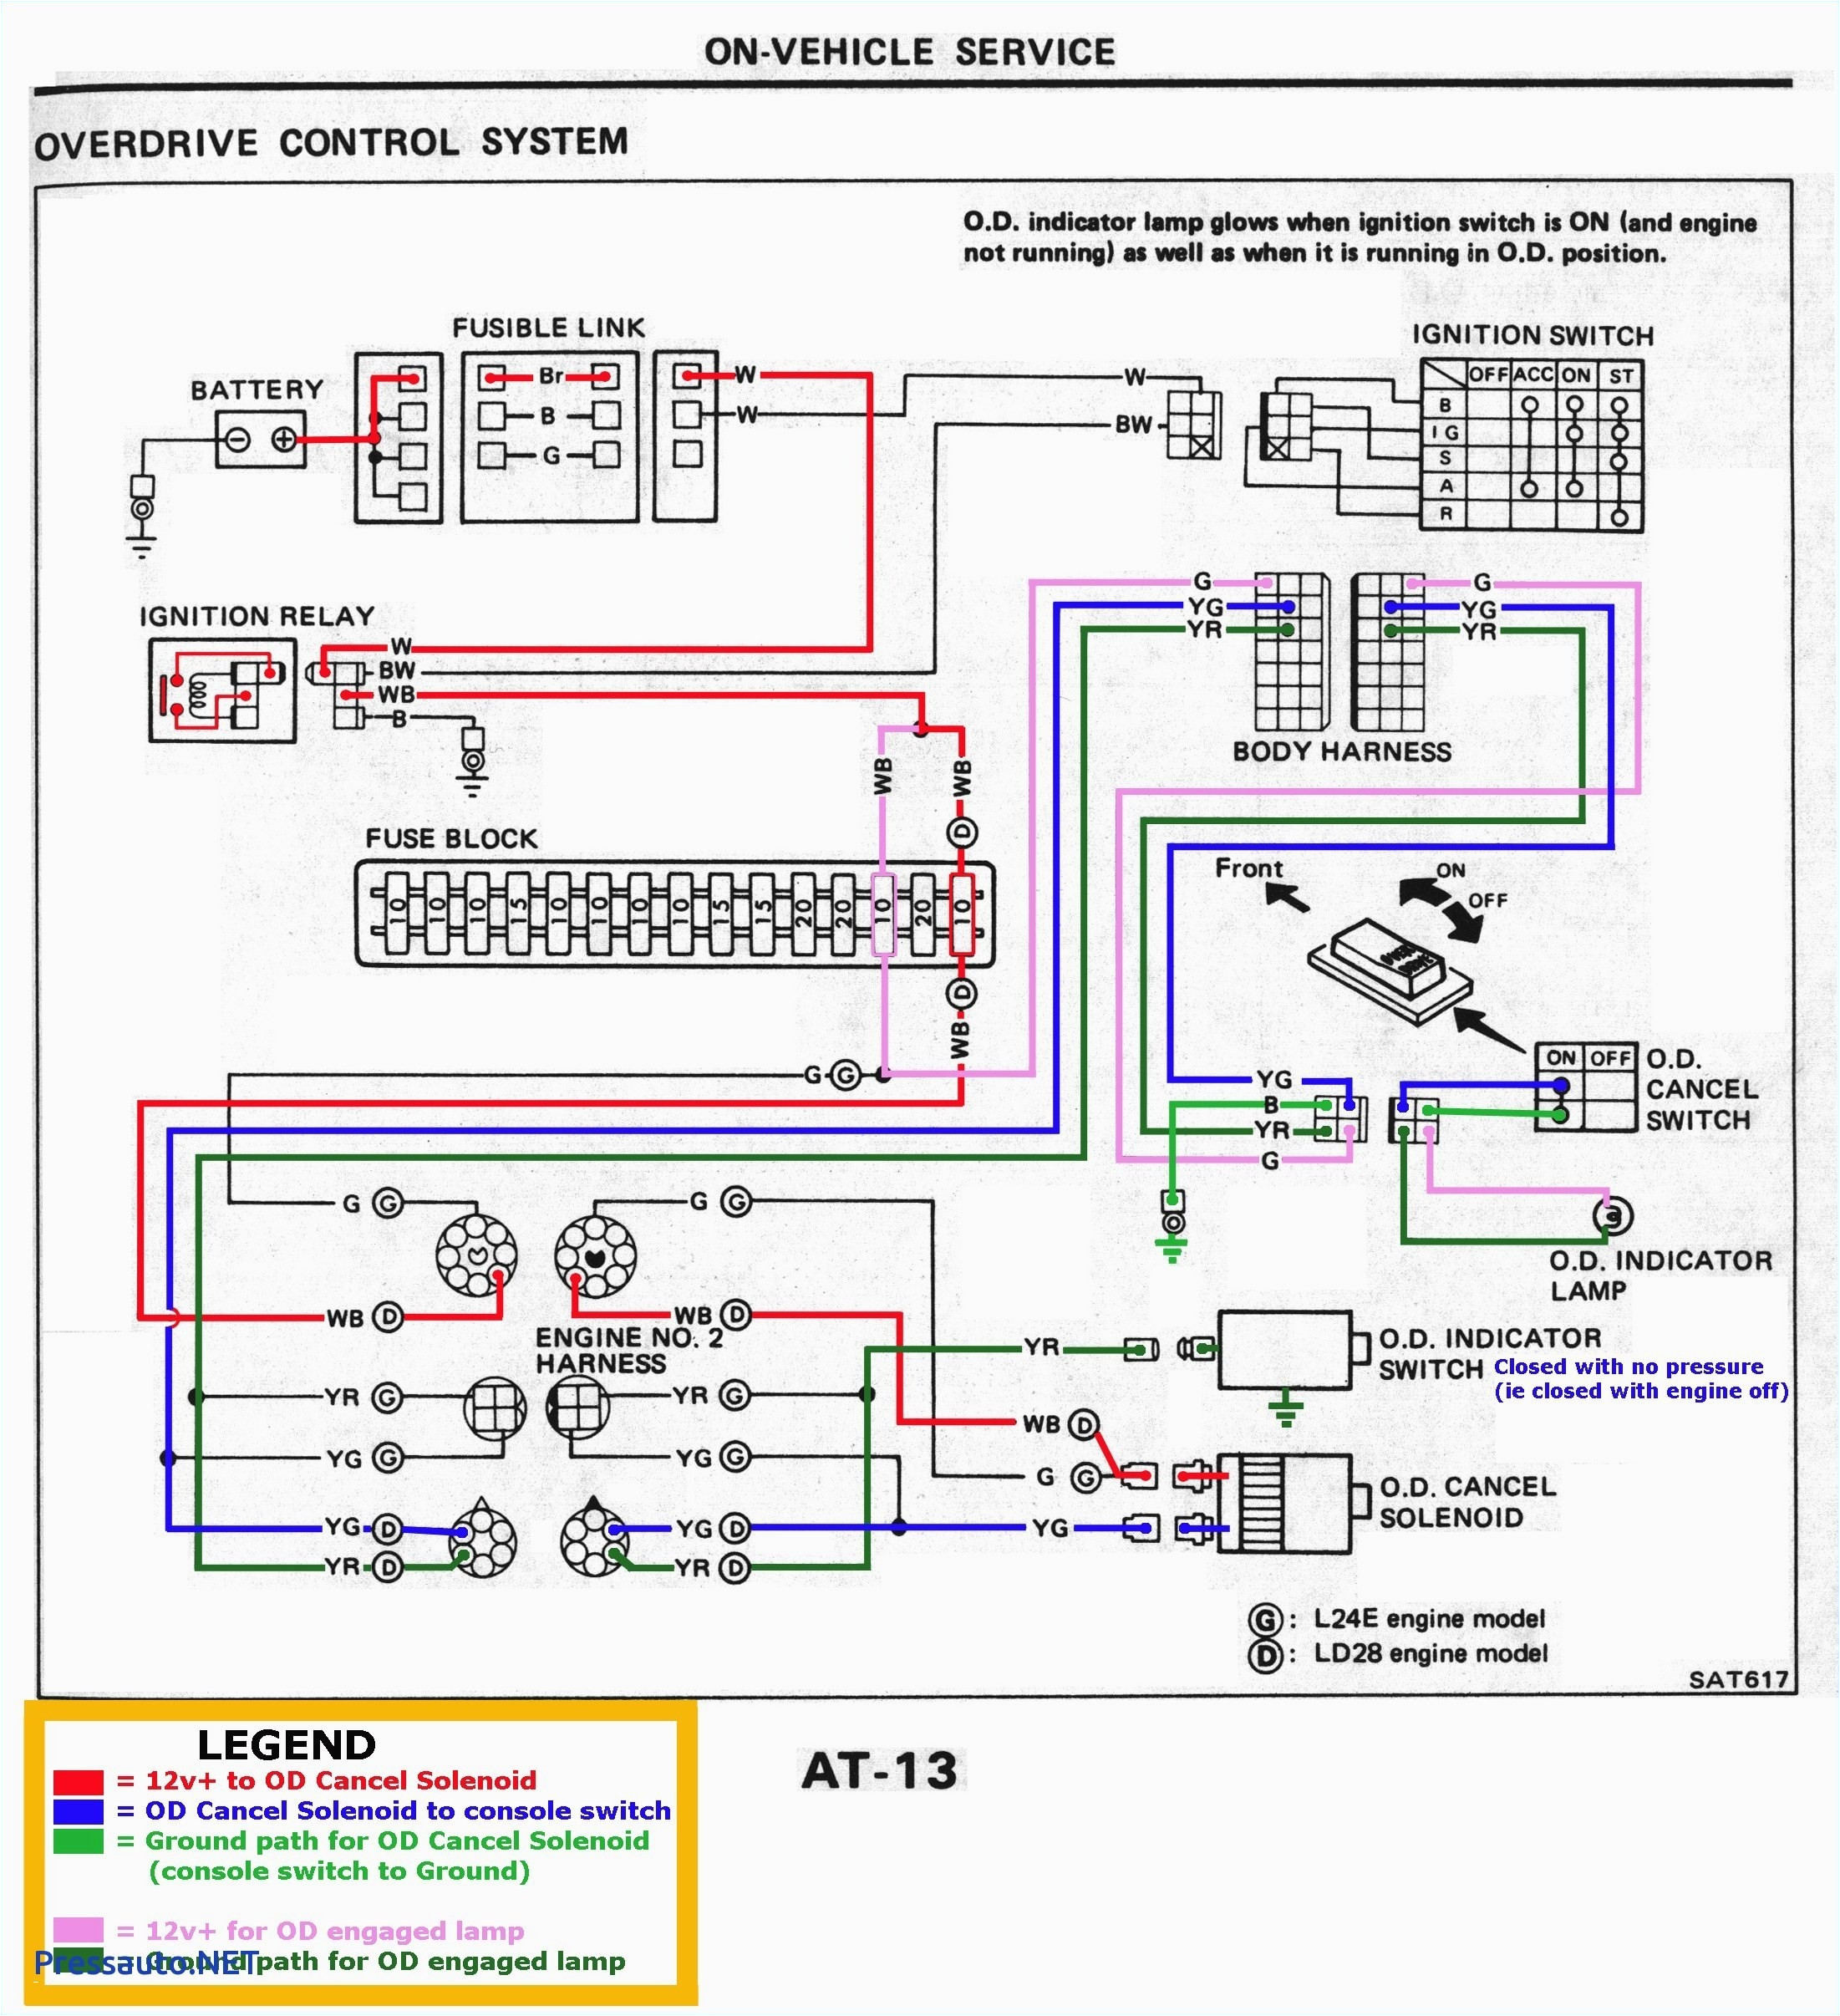 samsung security camera wiring diagram unique samsung security camera wiring diagram new wiring diagram ip camera